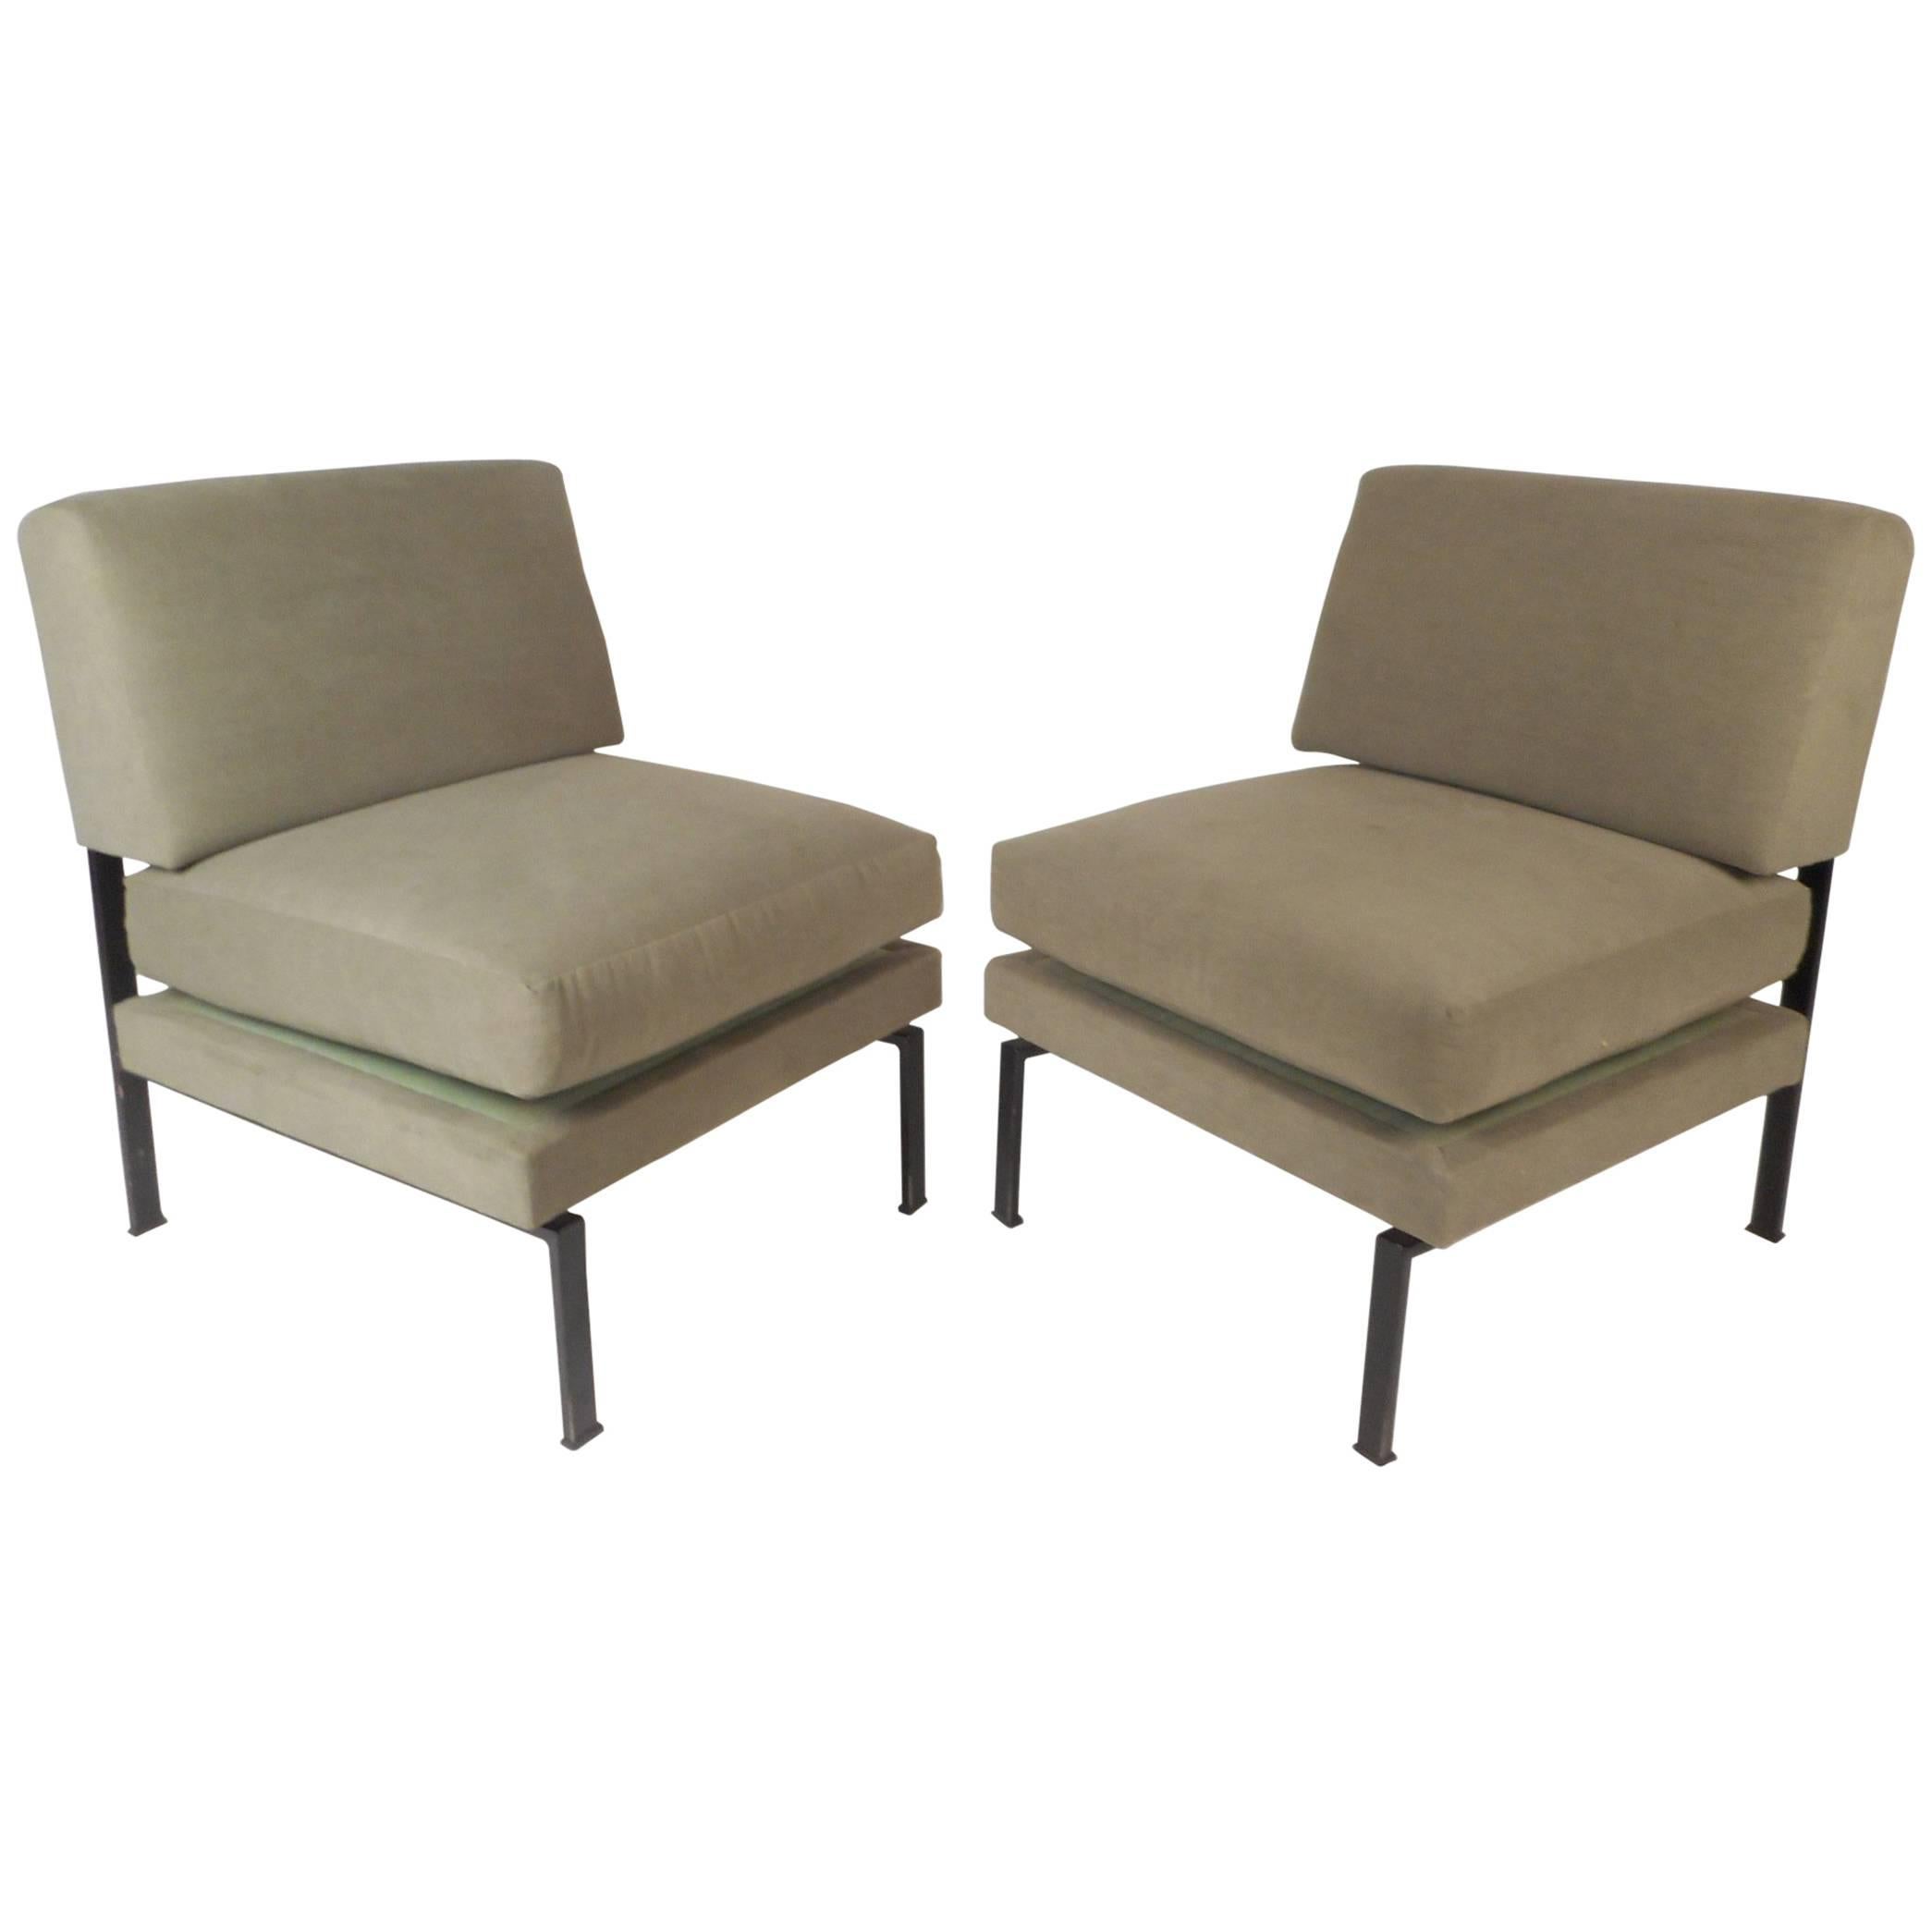 Pair of Mid-Century Modern Italian Trafilisa Lounge Chairs with Adjustable Seats